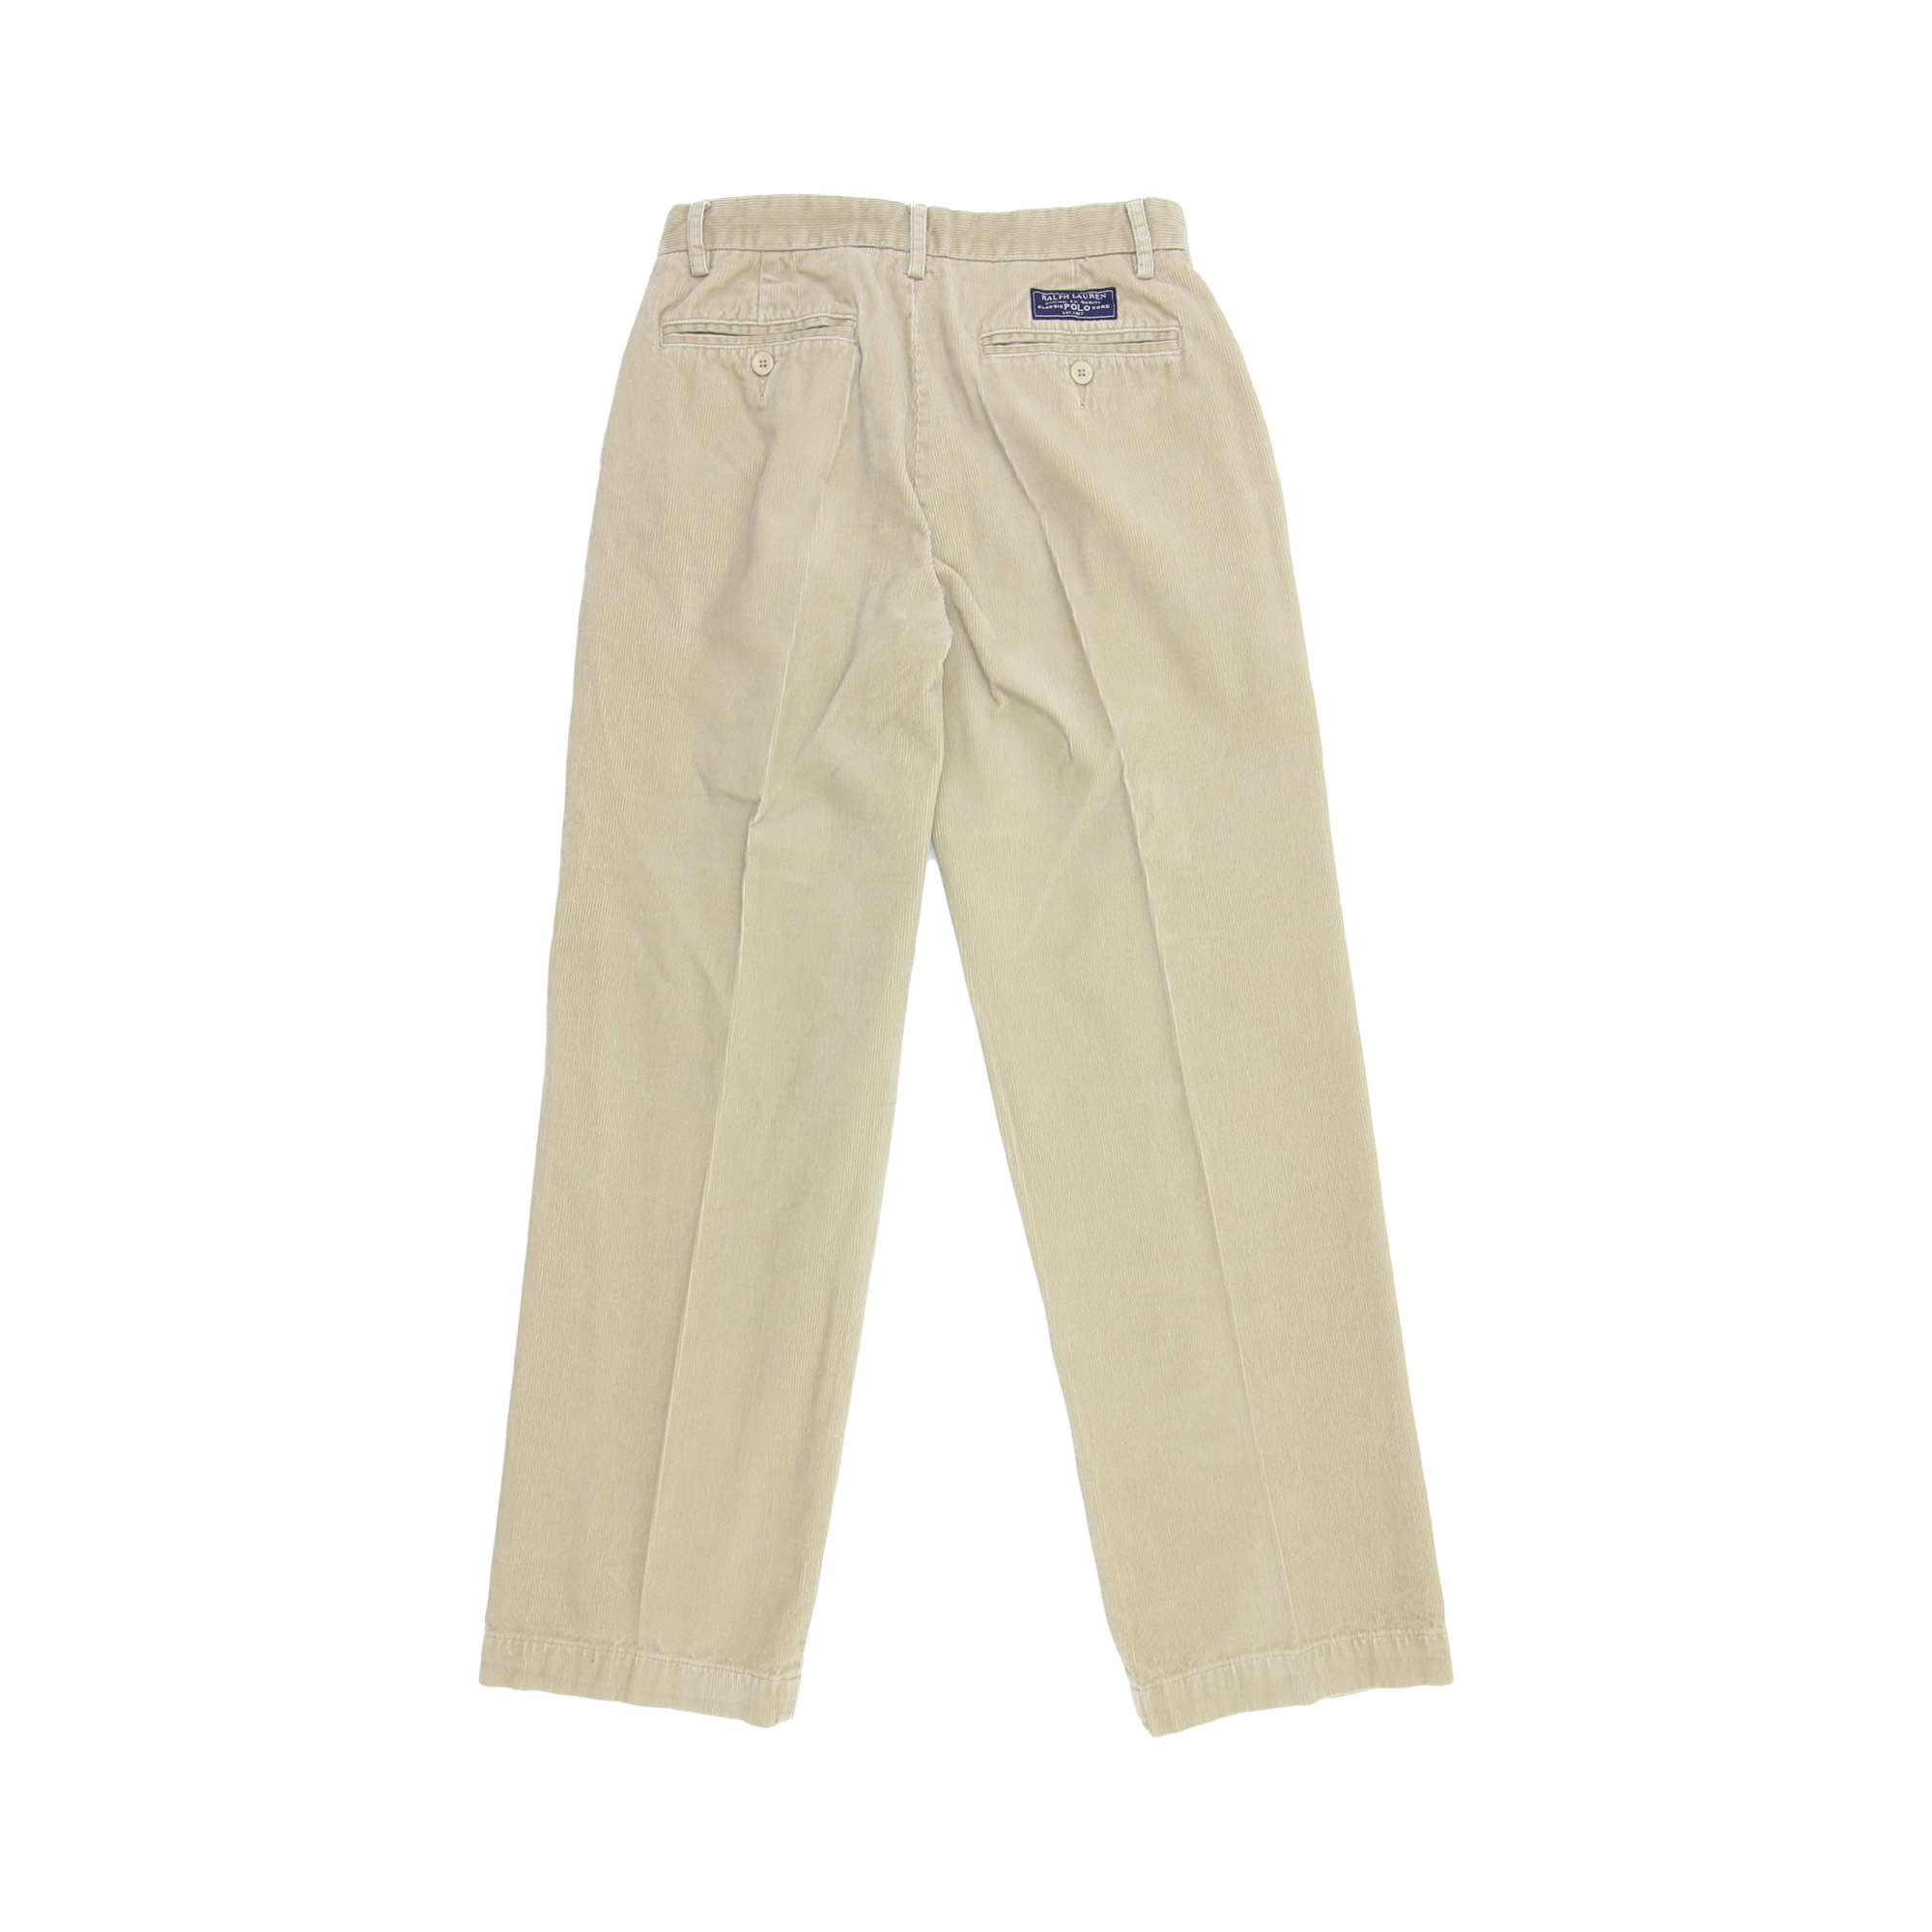 Polo Ralph Lauren Cord Pants -  S